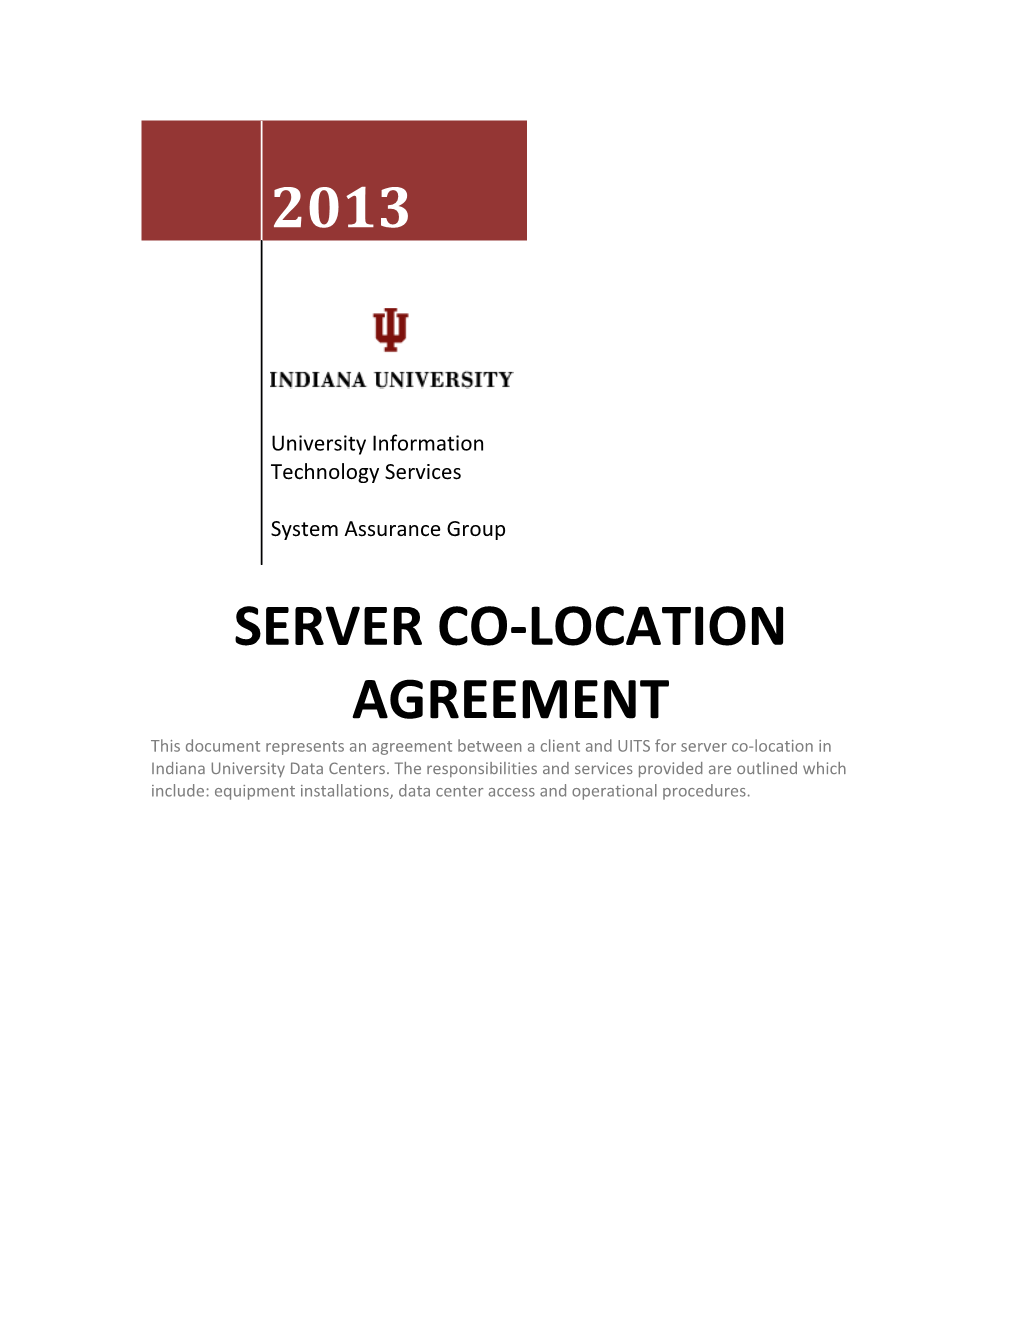 Server Co-Location Agreement